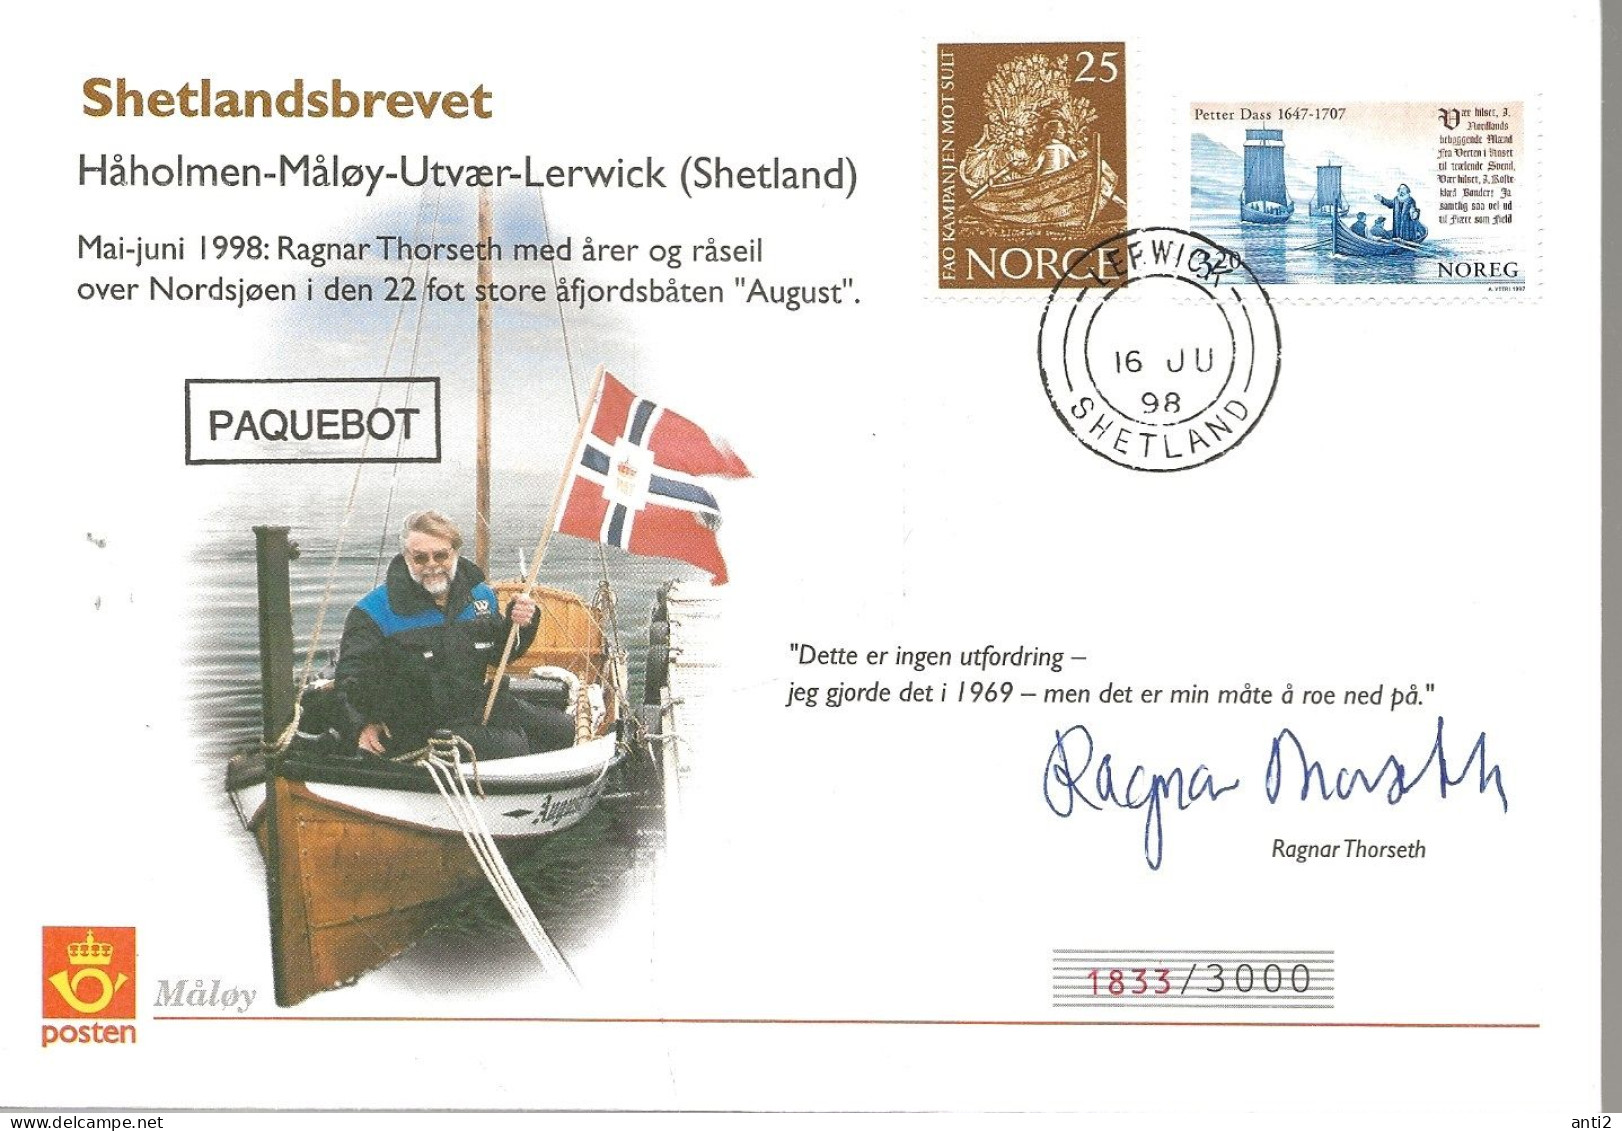 Norge Norway 1998 Shetlands Letter - Håholmen-Måløy-Utvær-Lerwick - Cancelled 16 JU 98  Lerwick Shetland - Covers & Documents